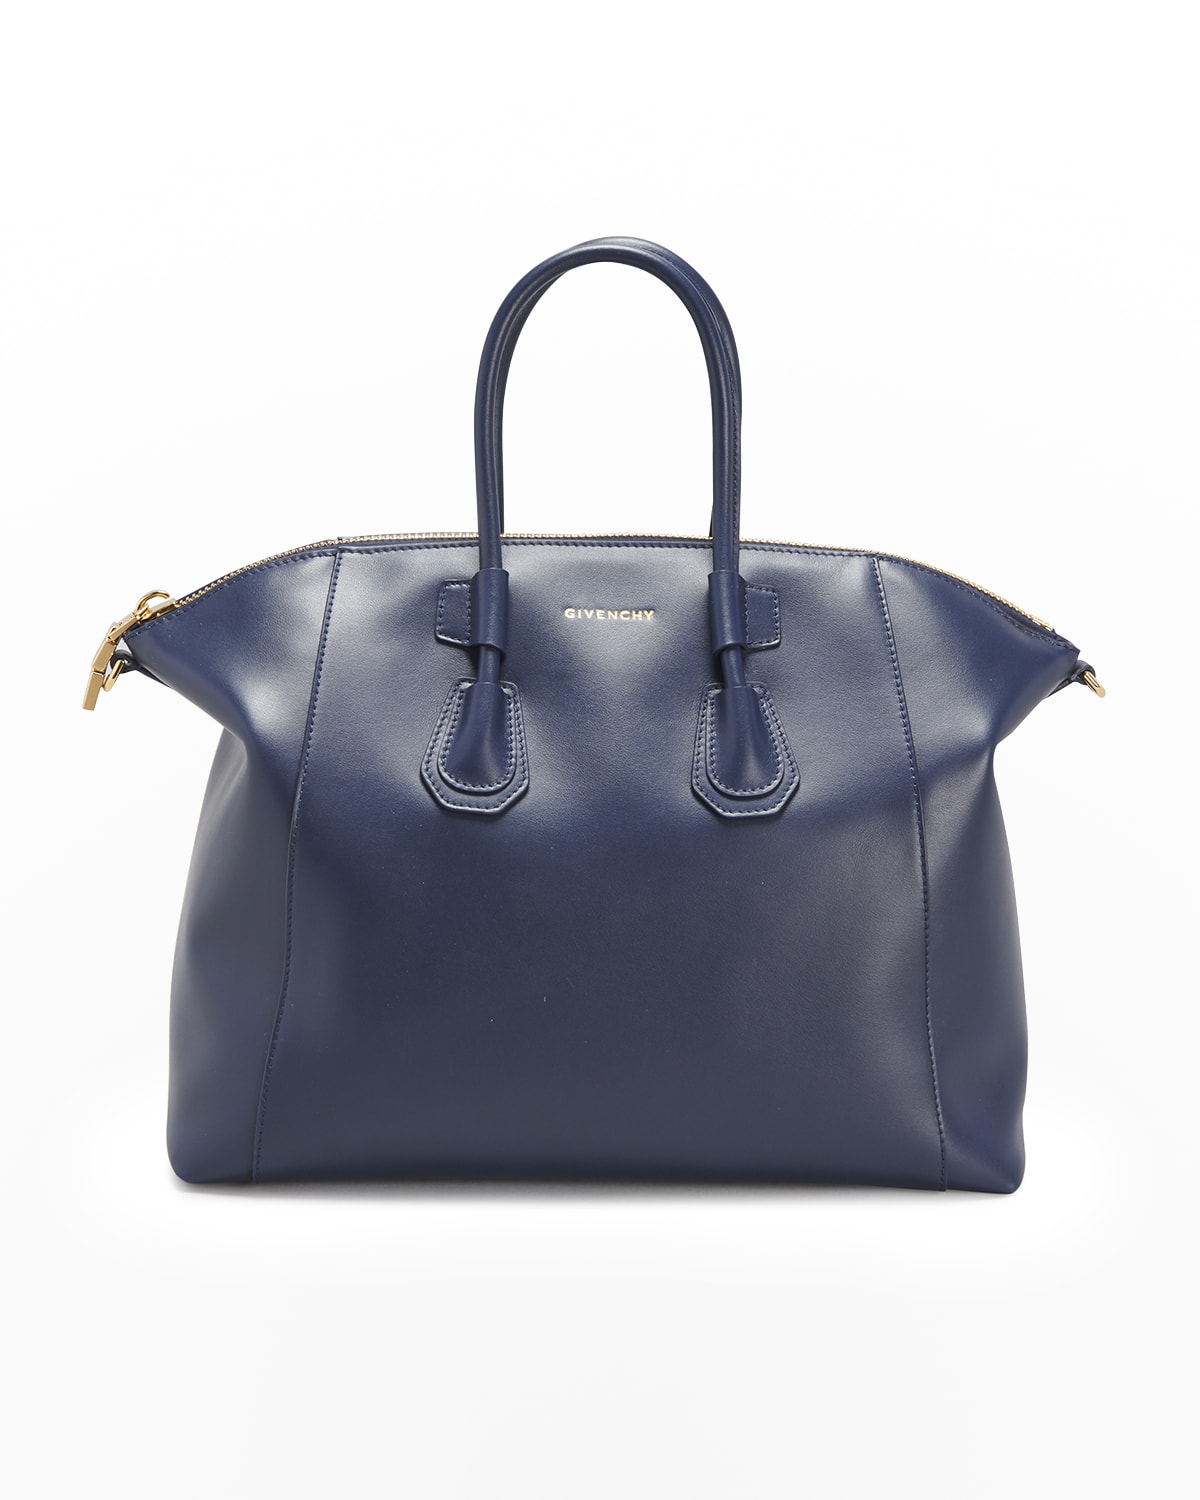 Givenchy Antigona Shiny Bag | Neiman Marcus